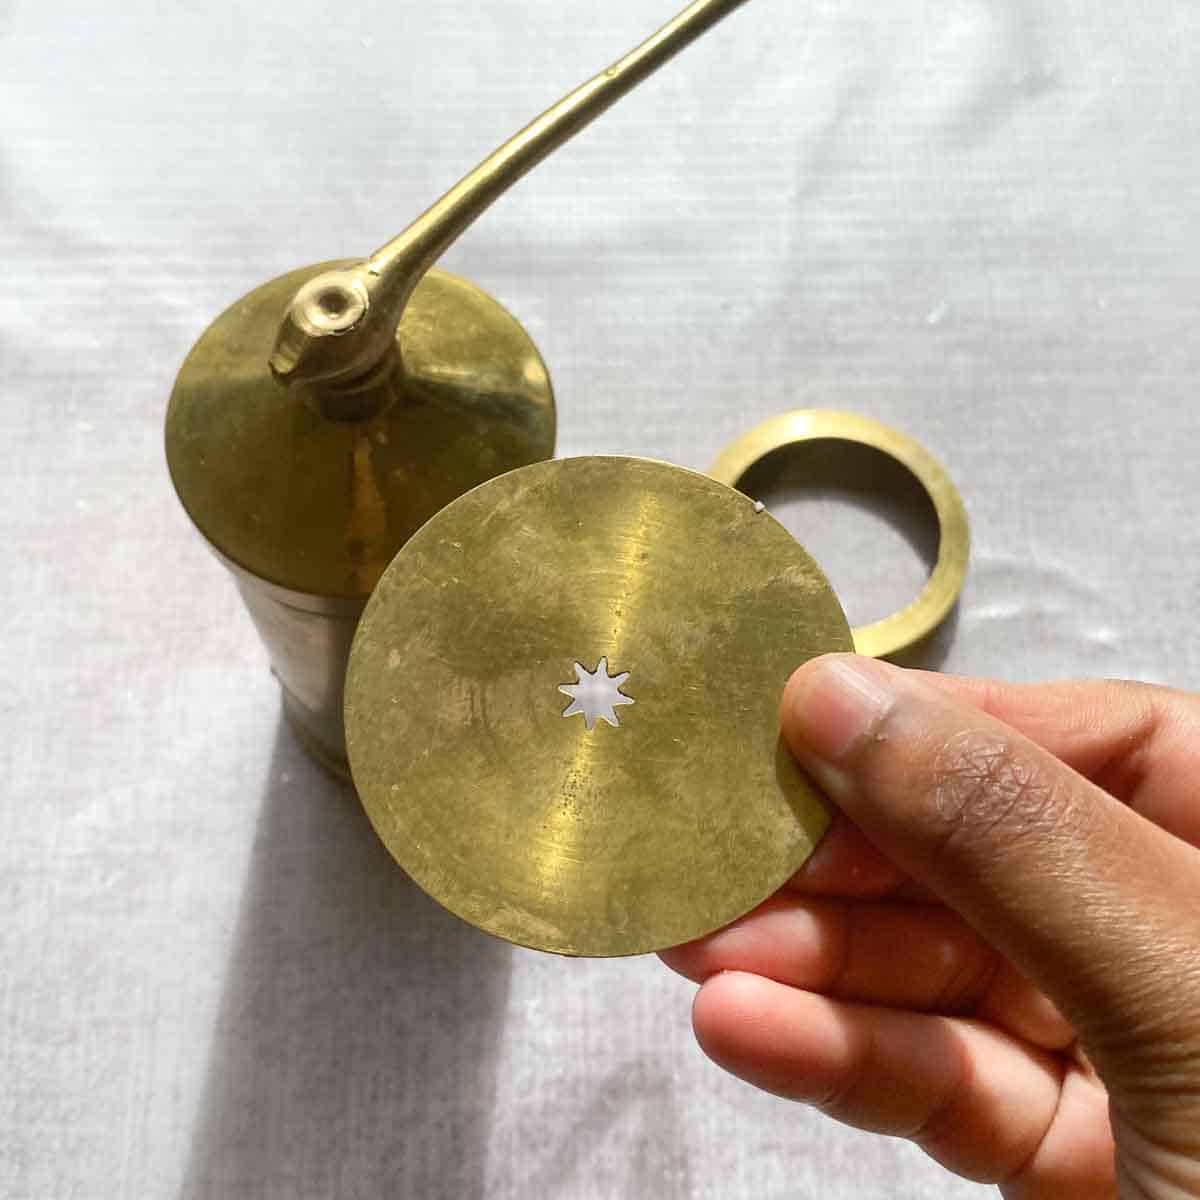 Murukku press with the star shaped plate shown